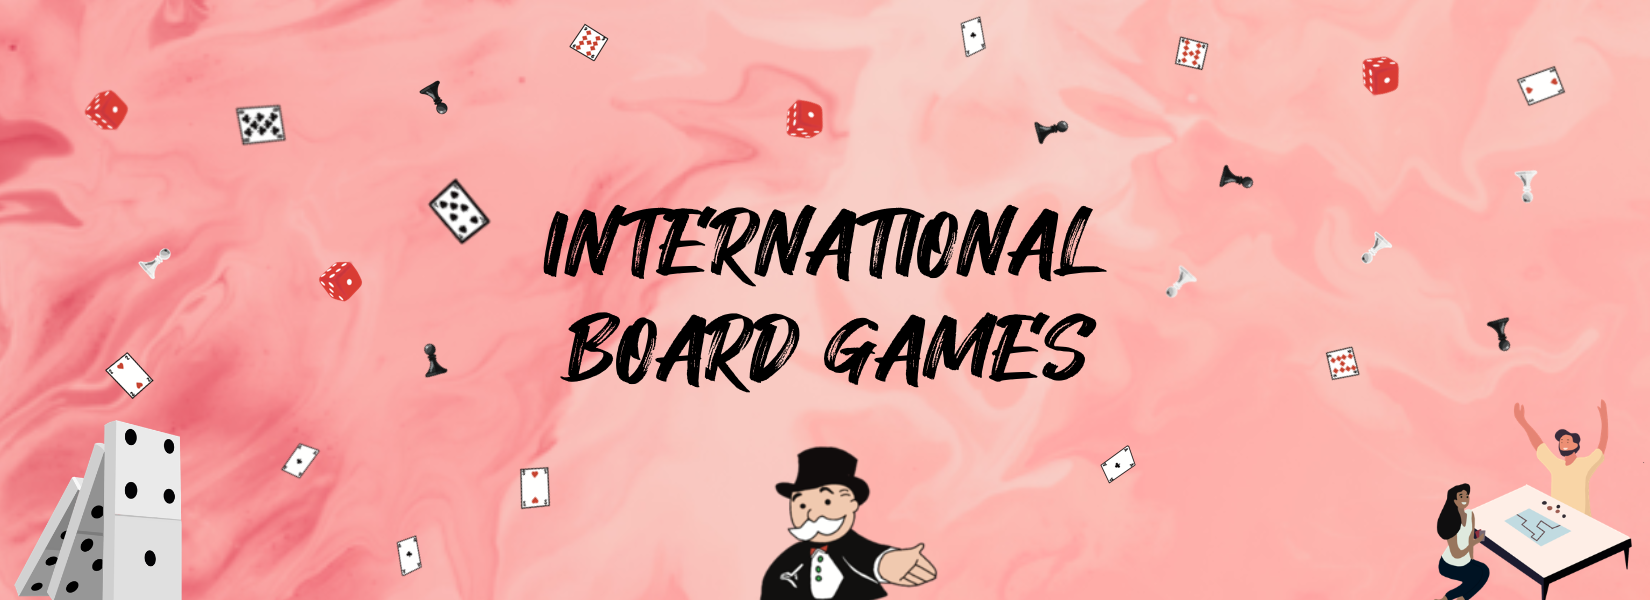 International board games event 2